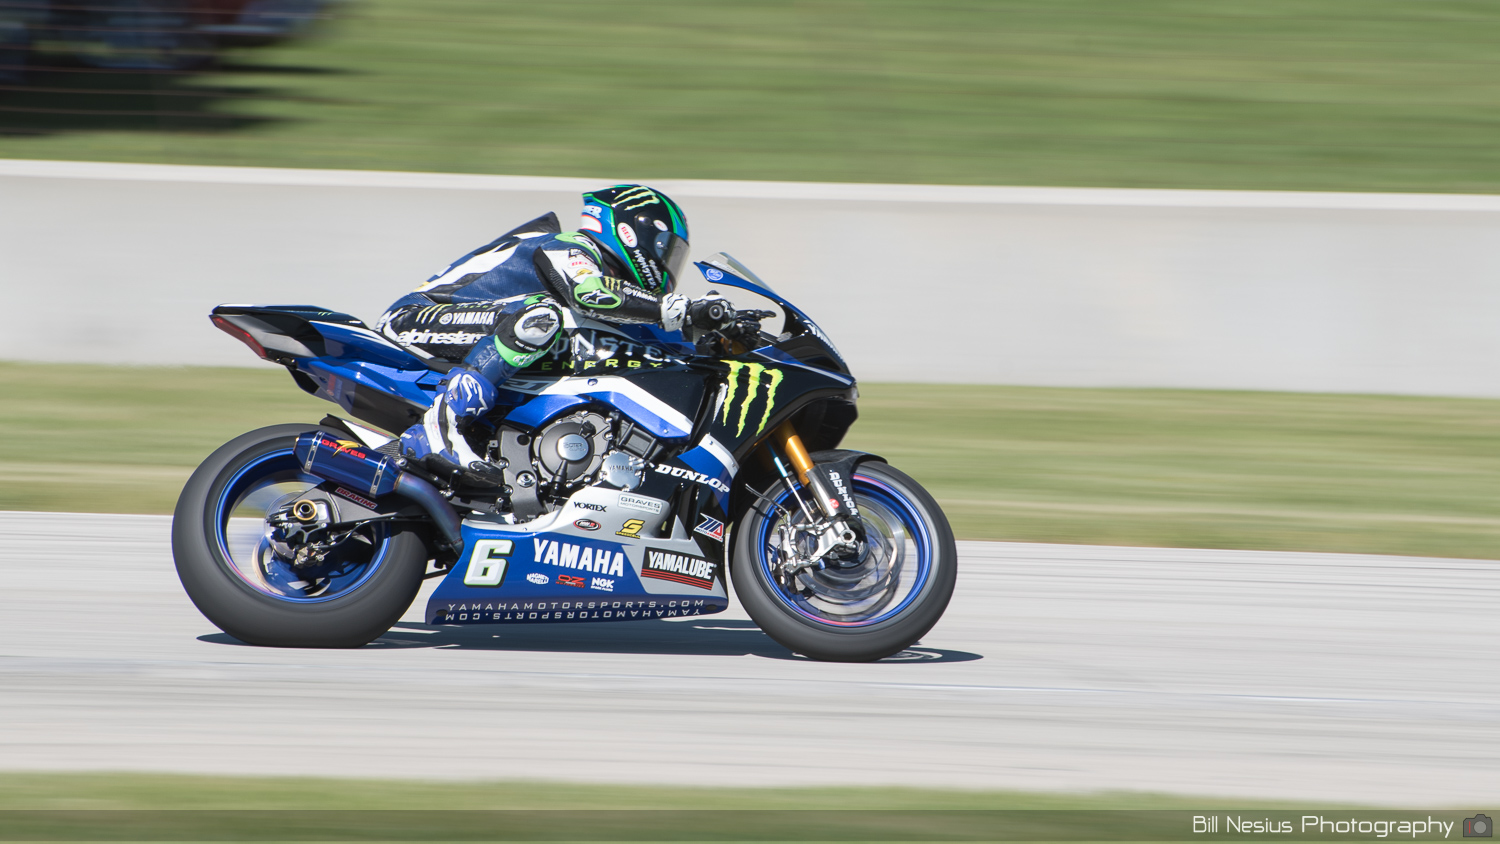 Cameron Beaubier on the Number 6 Monster Energy/Yamaha Extended Service/Graves Yamaha Yamaha YZF-R1 - Motul Superbike ~ DSC_3587 ~ 4